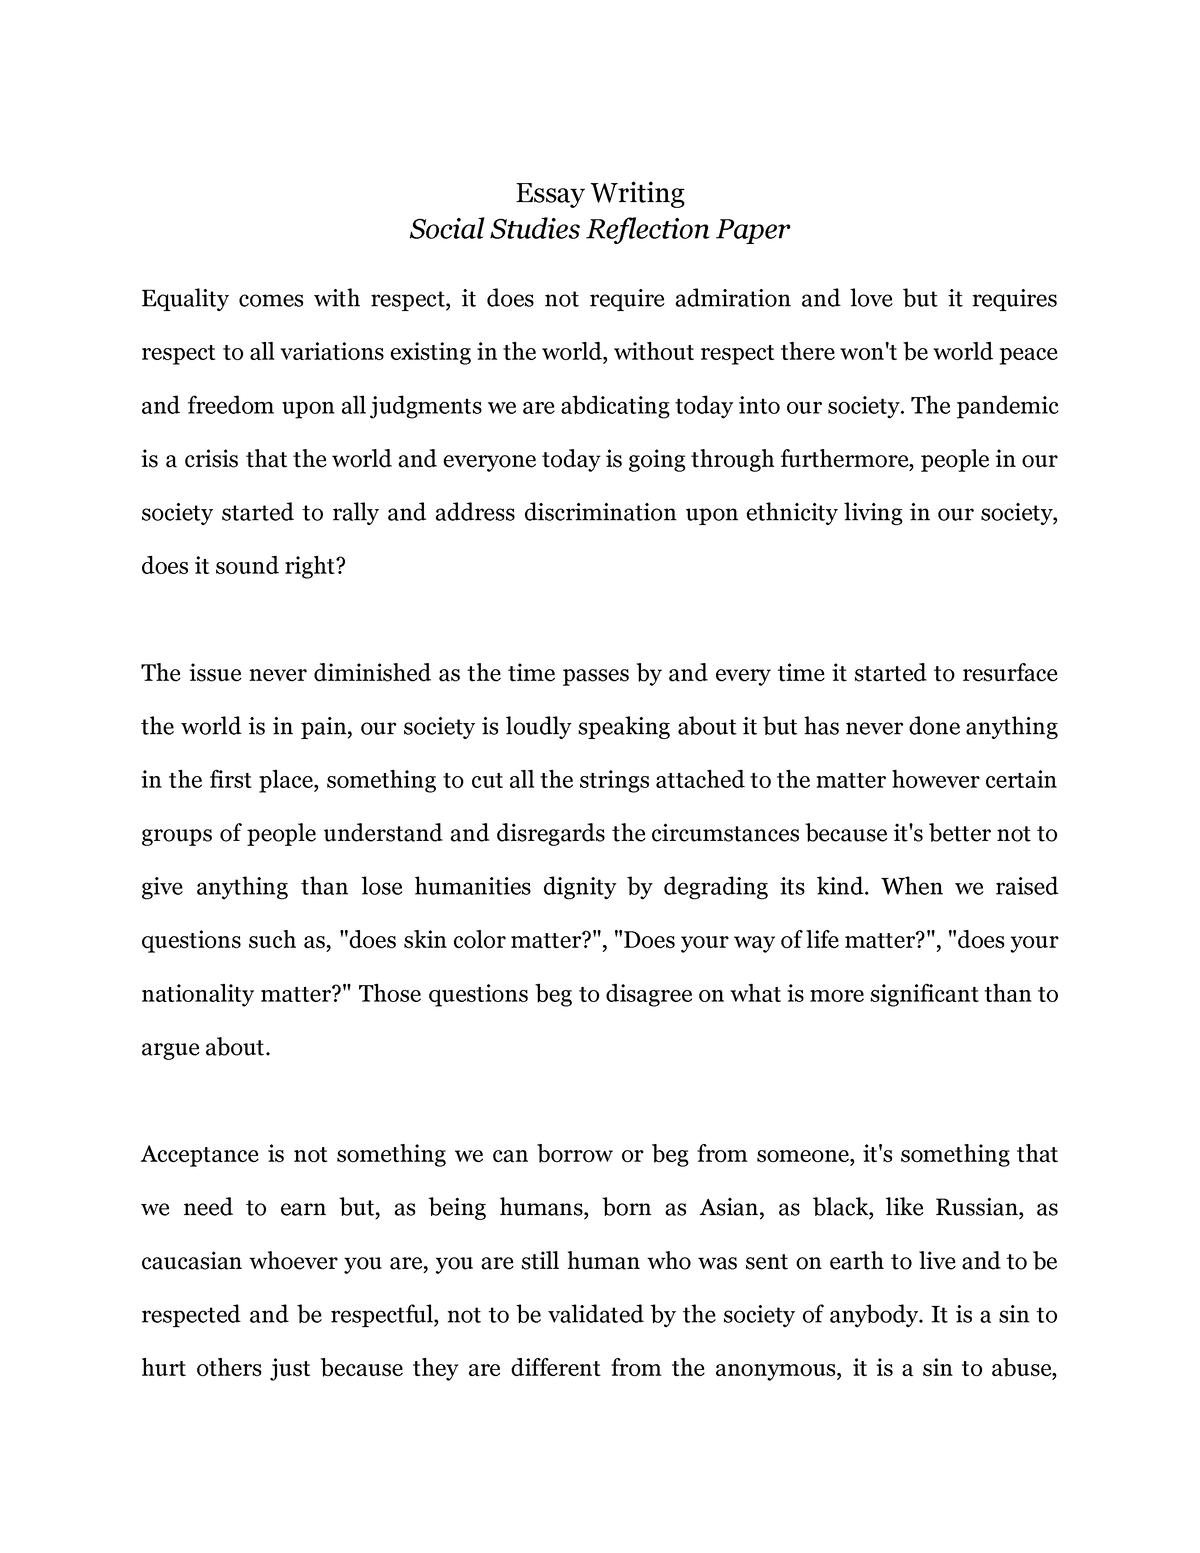 write an essay about social studies